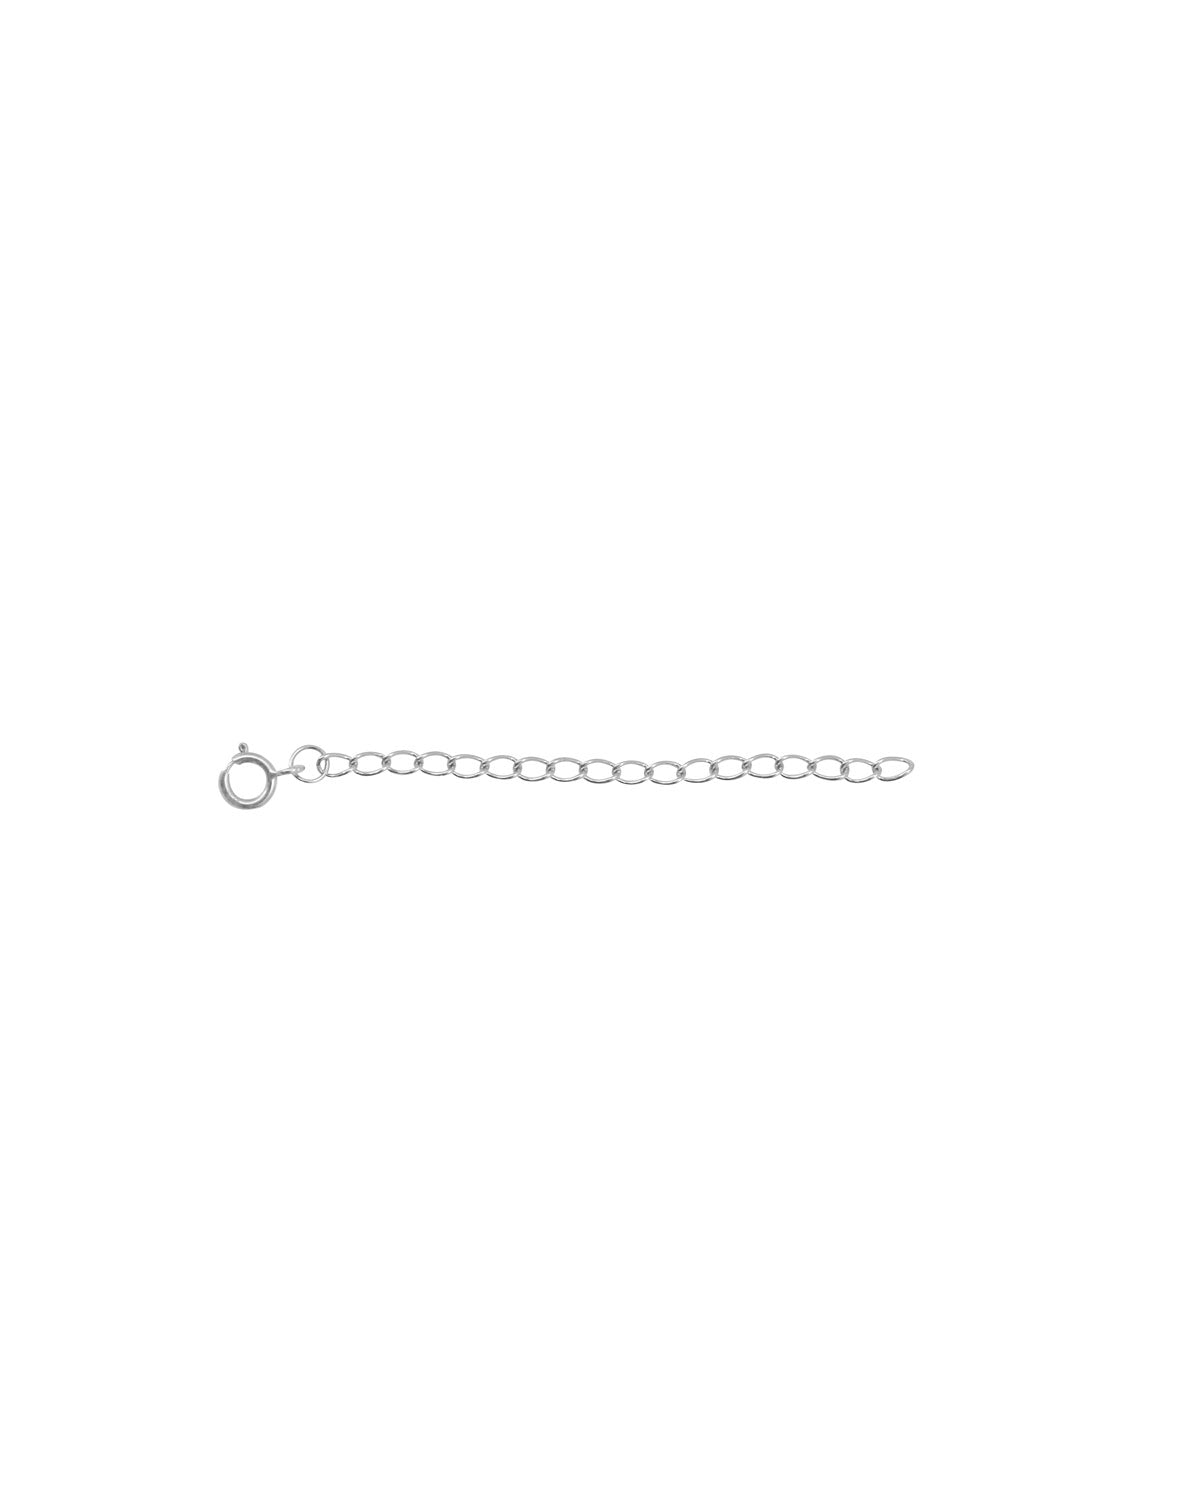 Necklace extender, Stainless steel chain, Adjustable bracelet part